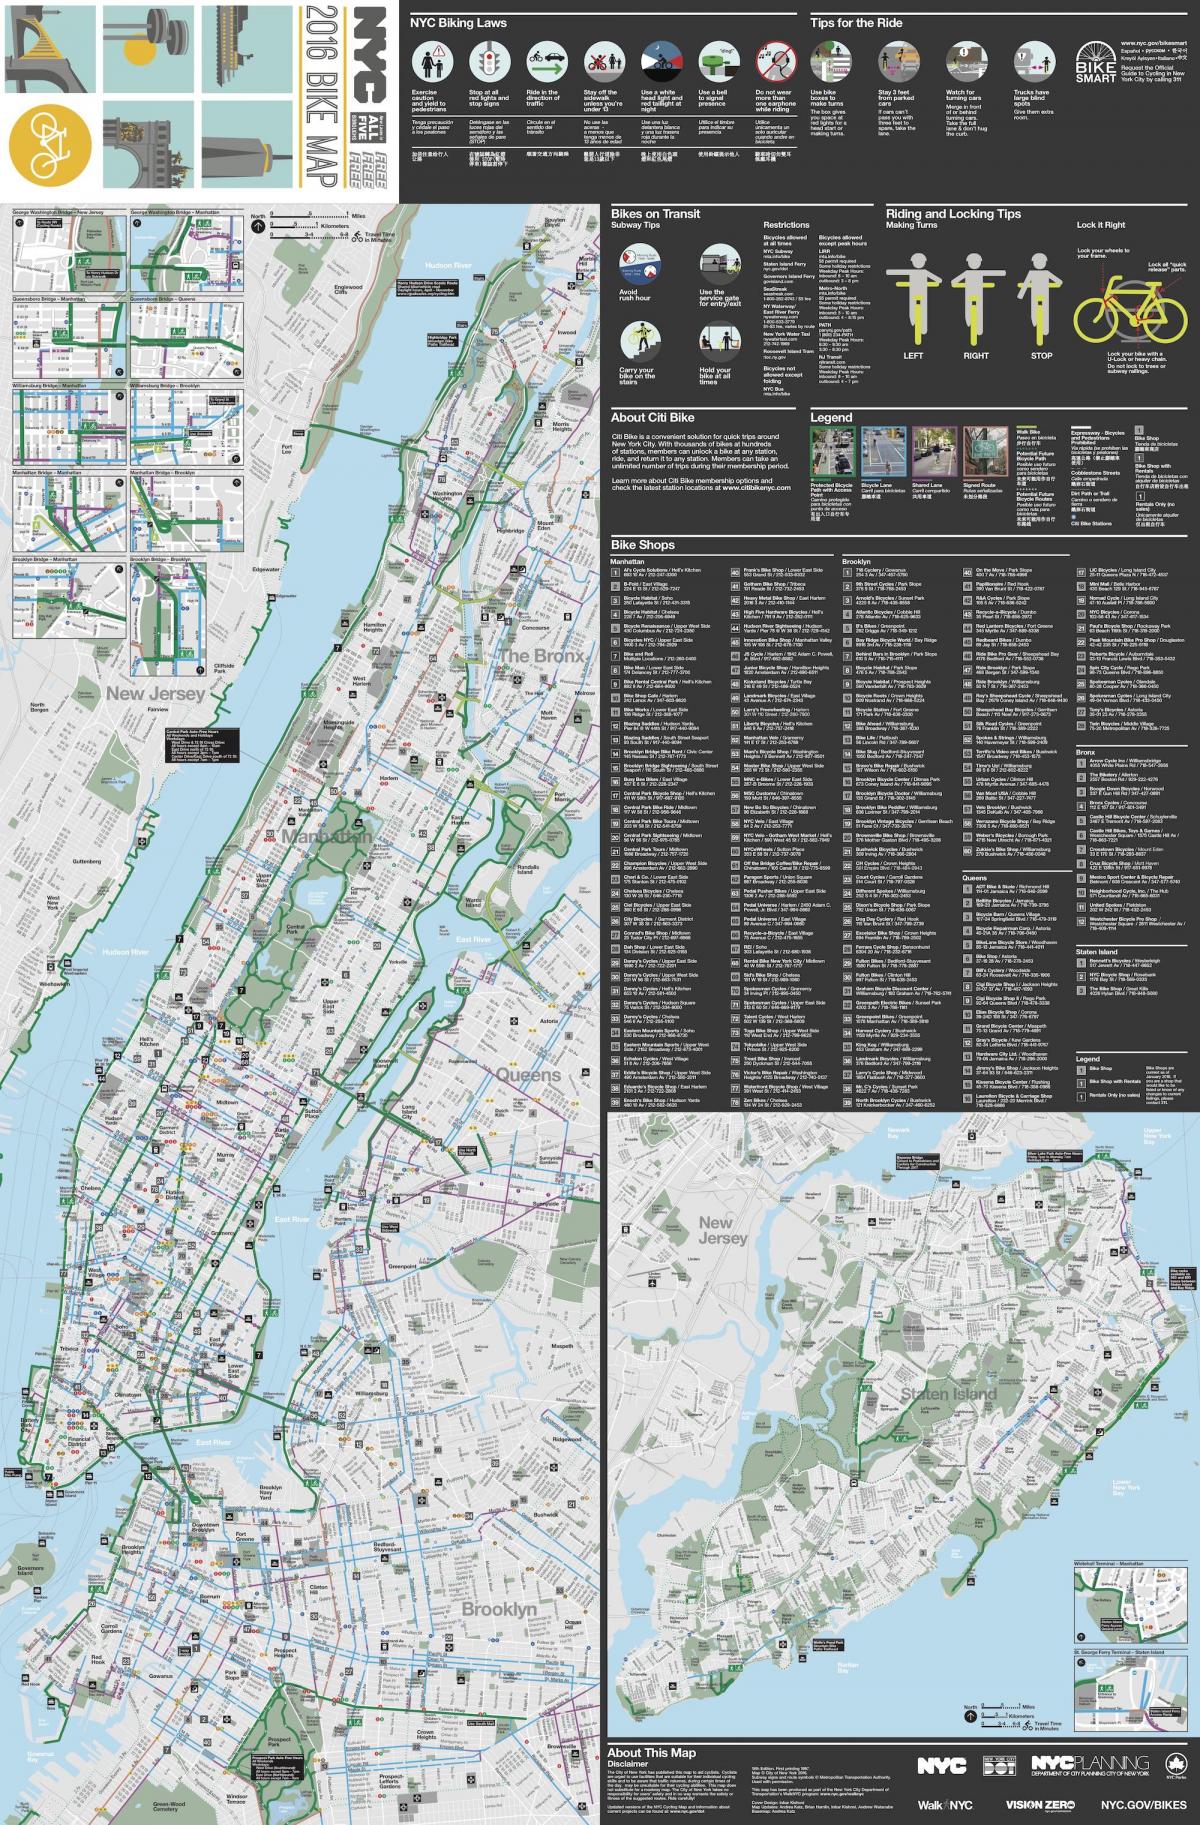 Bicikl Manhattan traka na karti